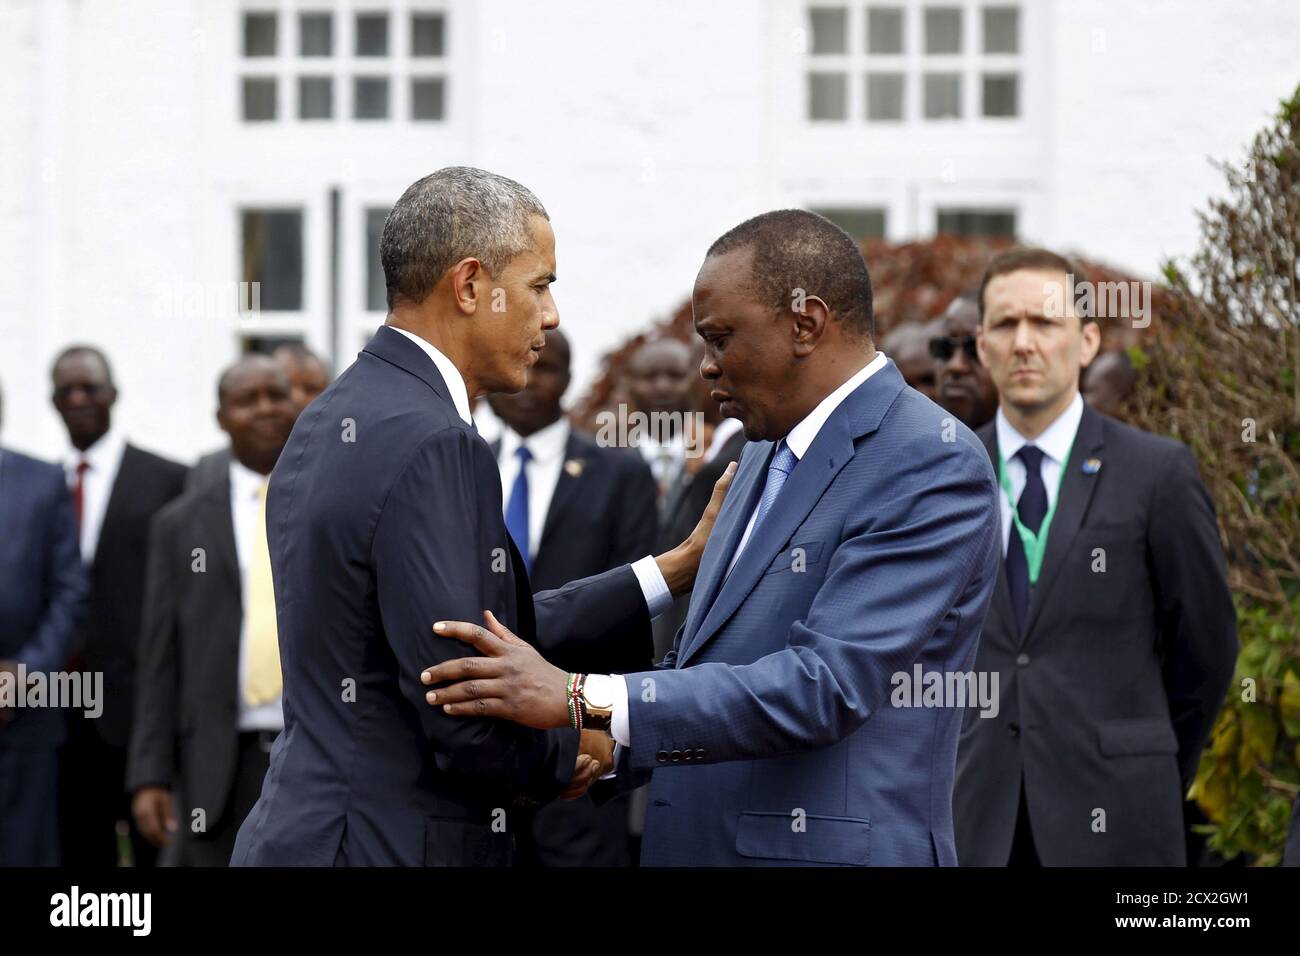 U.S. President Barack Obama (L) meets Kenya's President Uhuru Kenyatta (R) as he arrives for a visit at the State House in Kenya's capital Nairobi, July 25, 2015. REUTERS/Thomas Mukoya Stock Photo